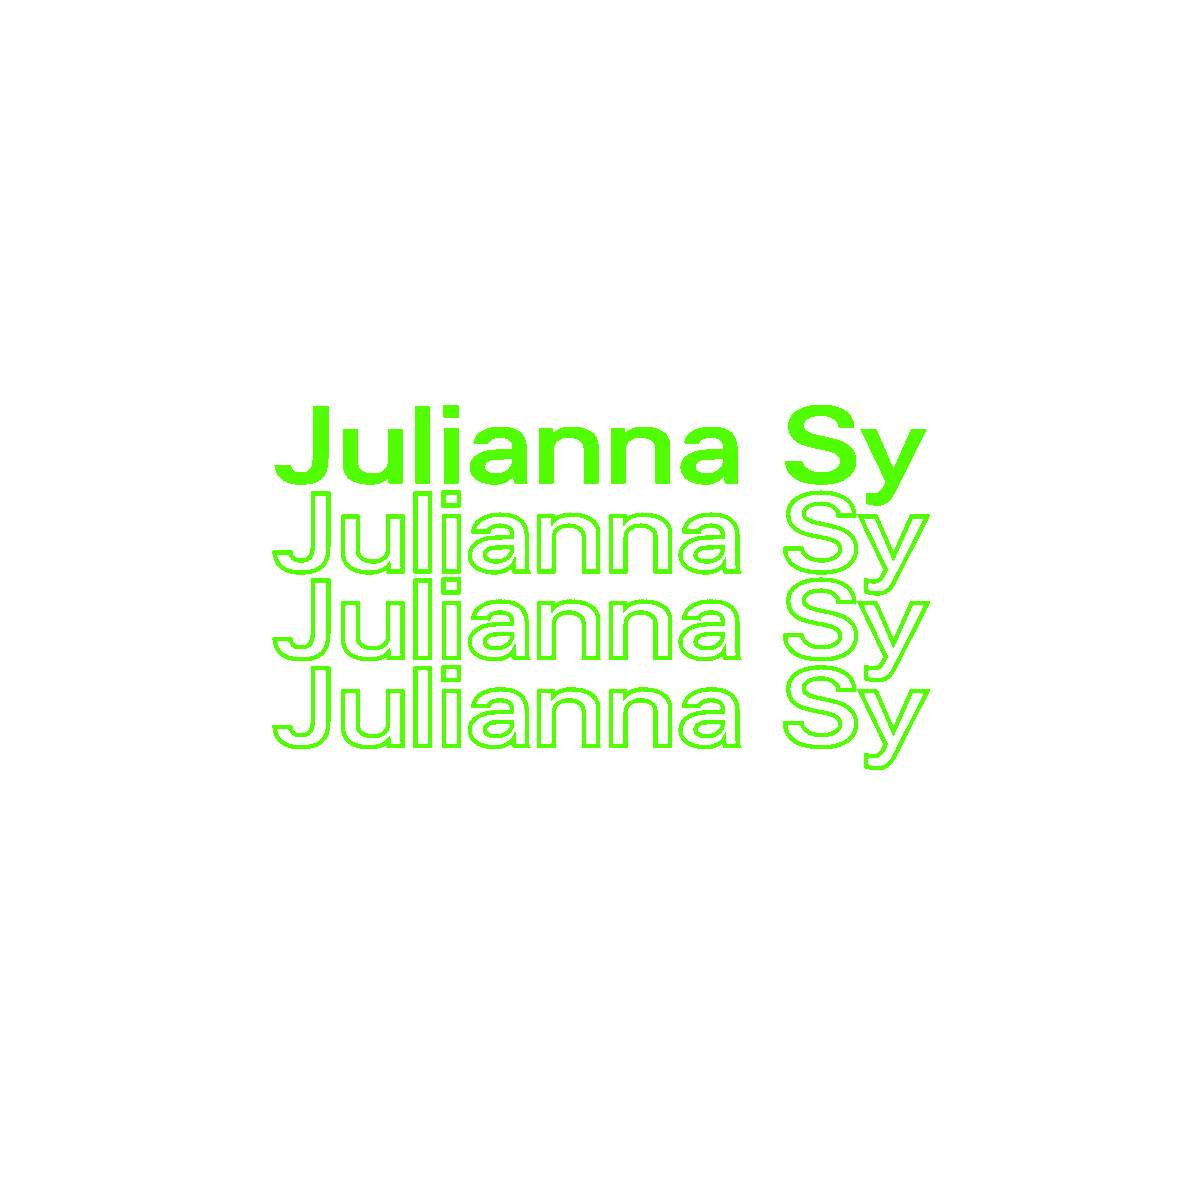 Julianna Sy's Portfolio